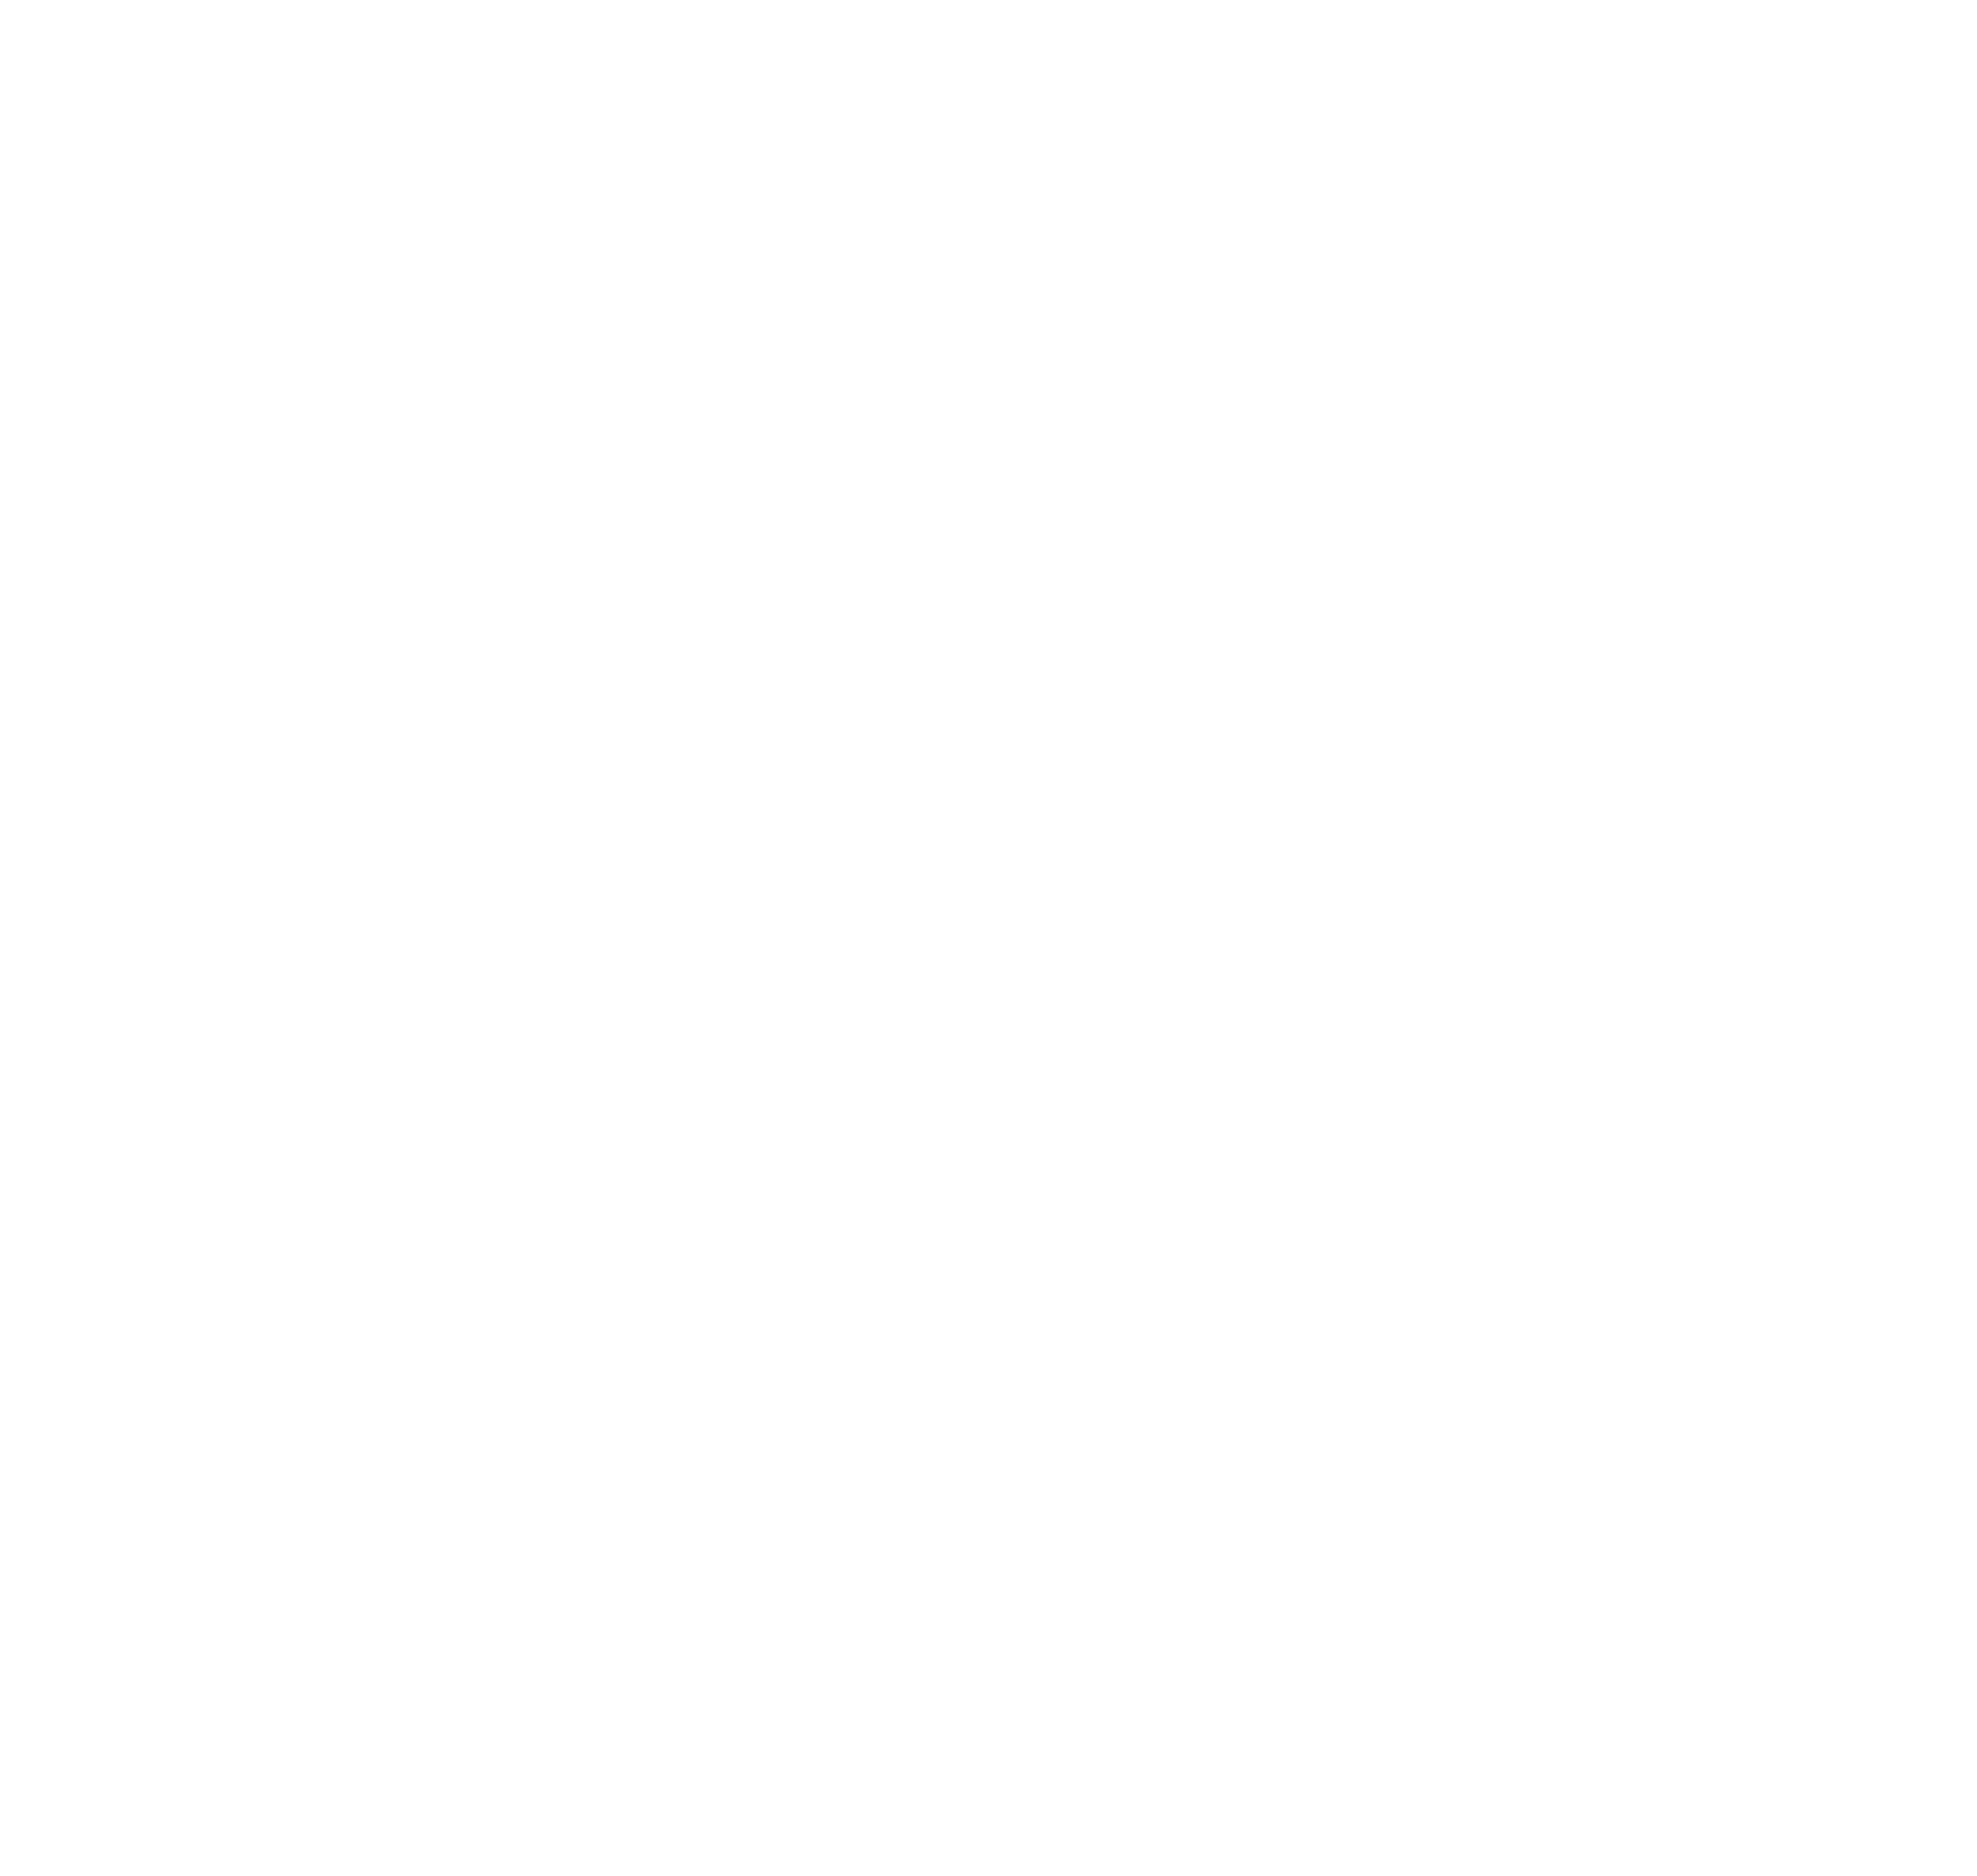 Newport Logo - The Coffee Grinder Newport